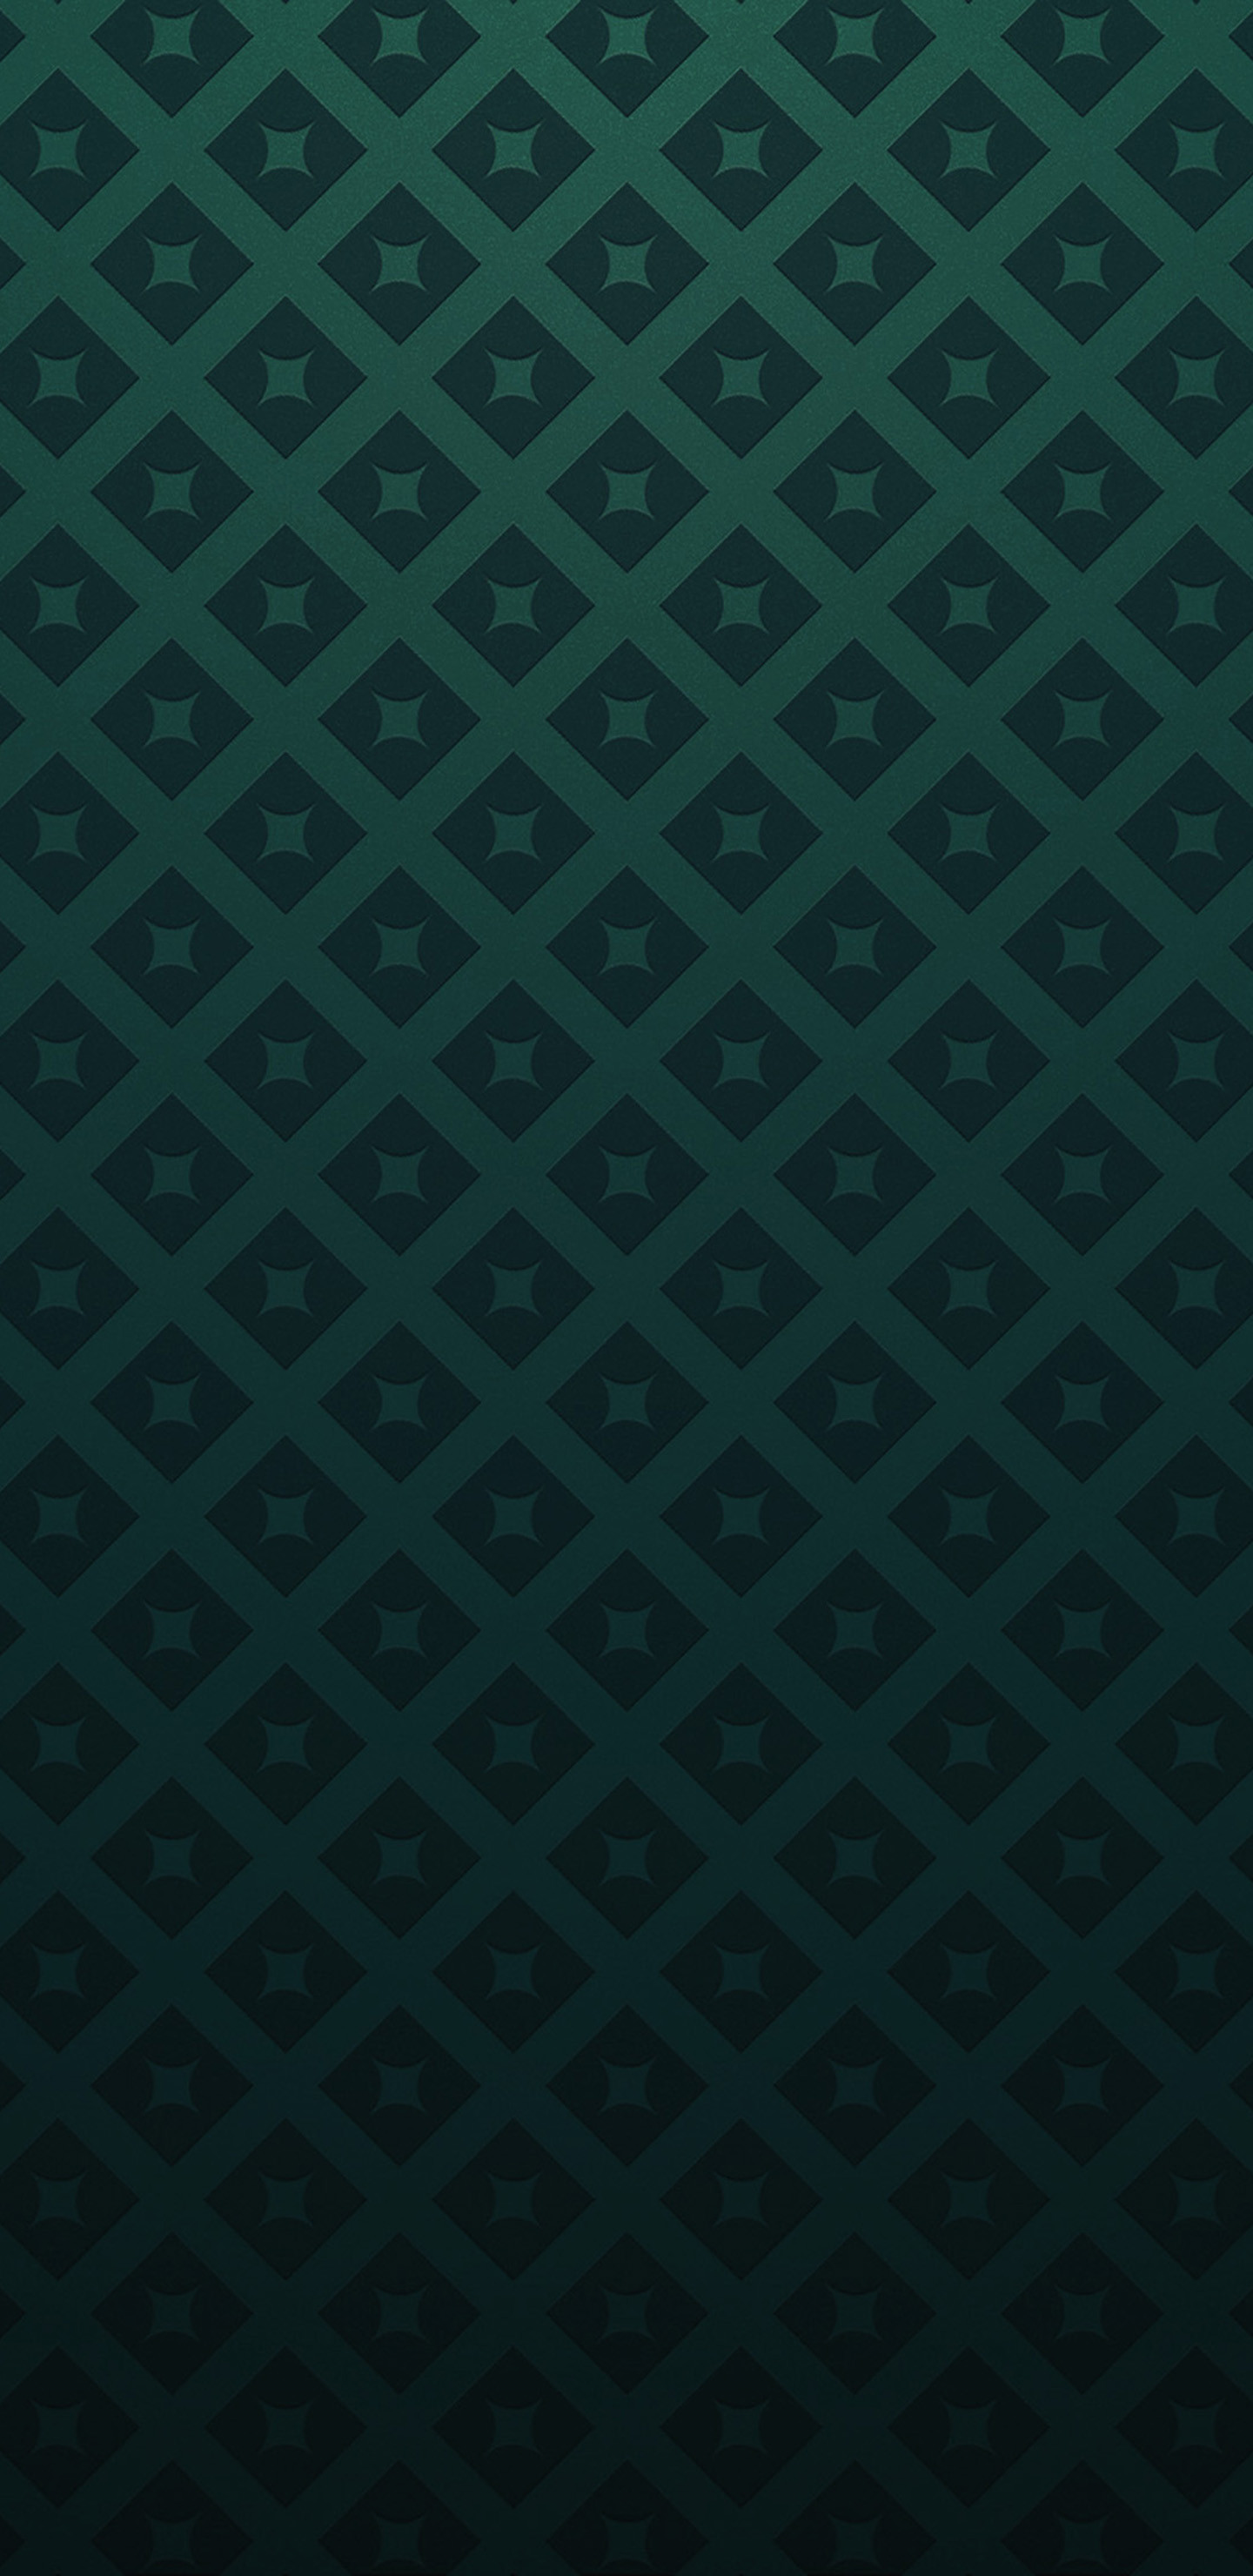 1440x2960 Dark green digital abstract pattern Galaxy Note 8 Wallpaper